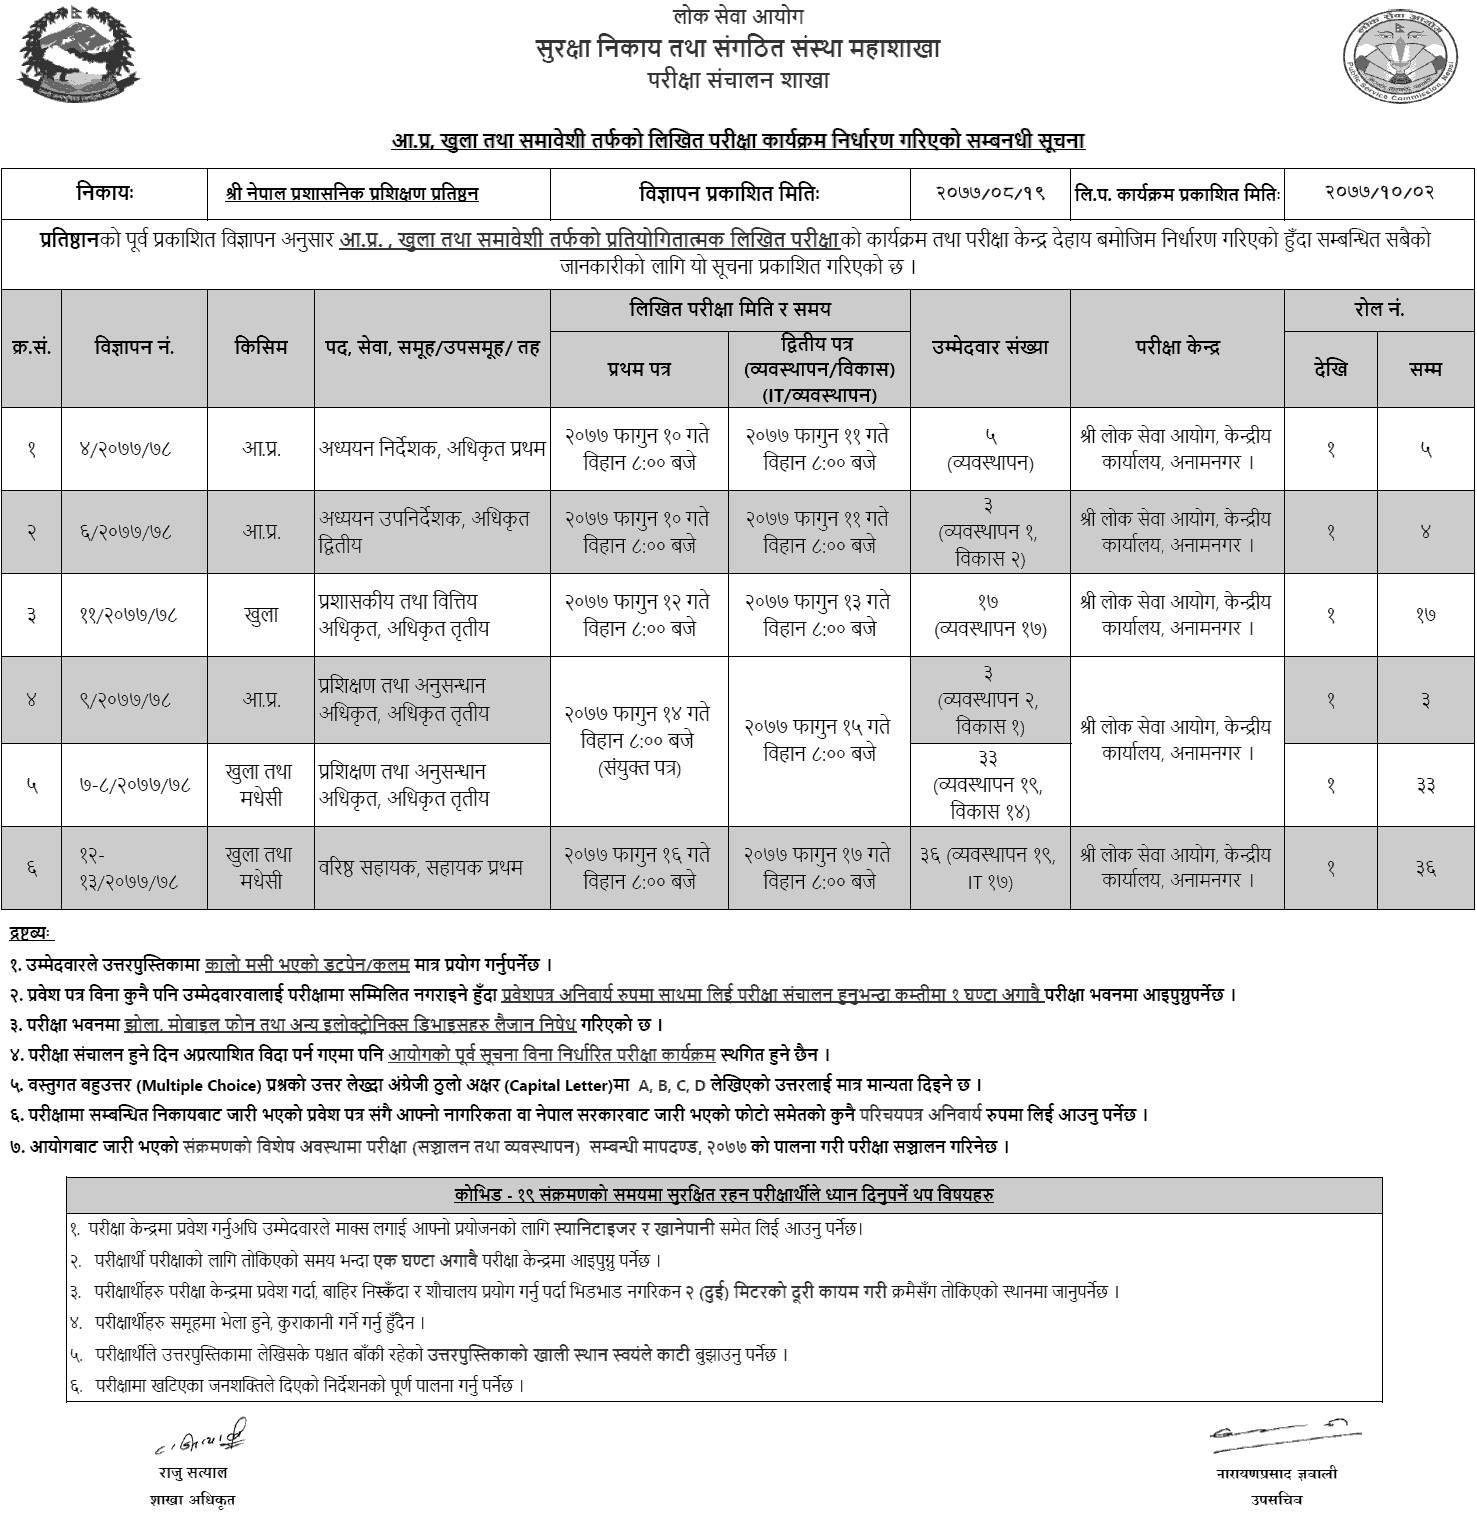 Nepal Administrative Staff College (NASC) Written Exam Center 2077